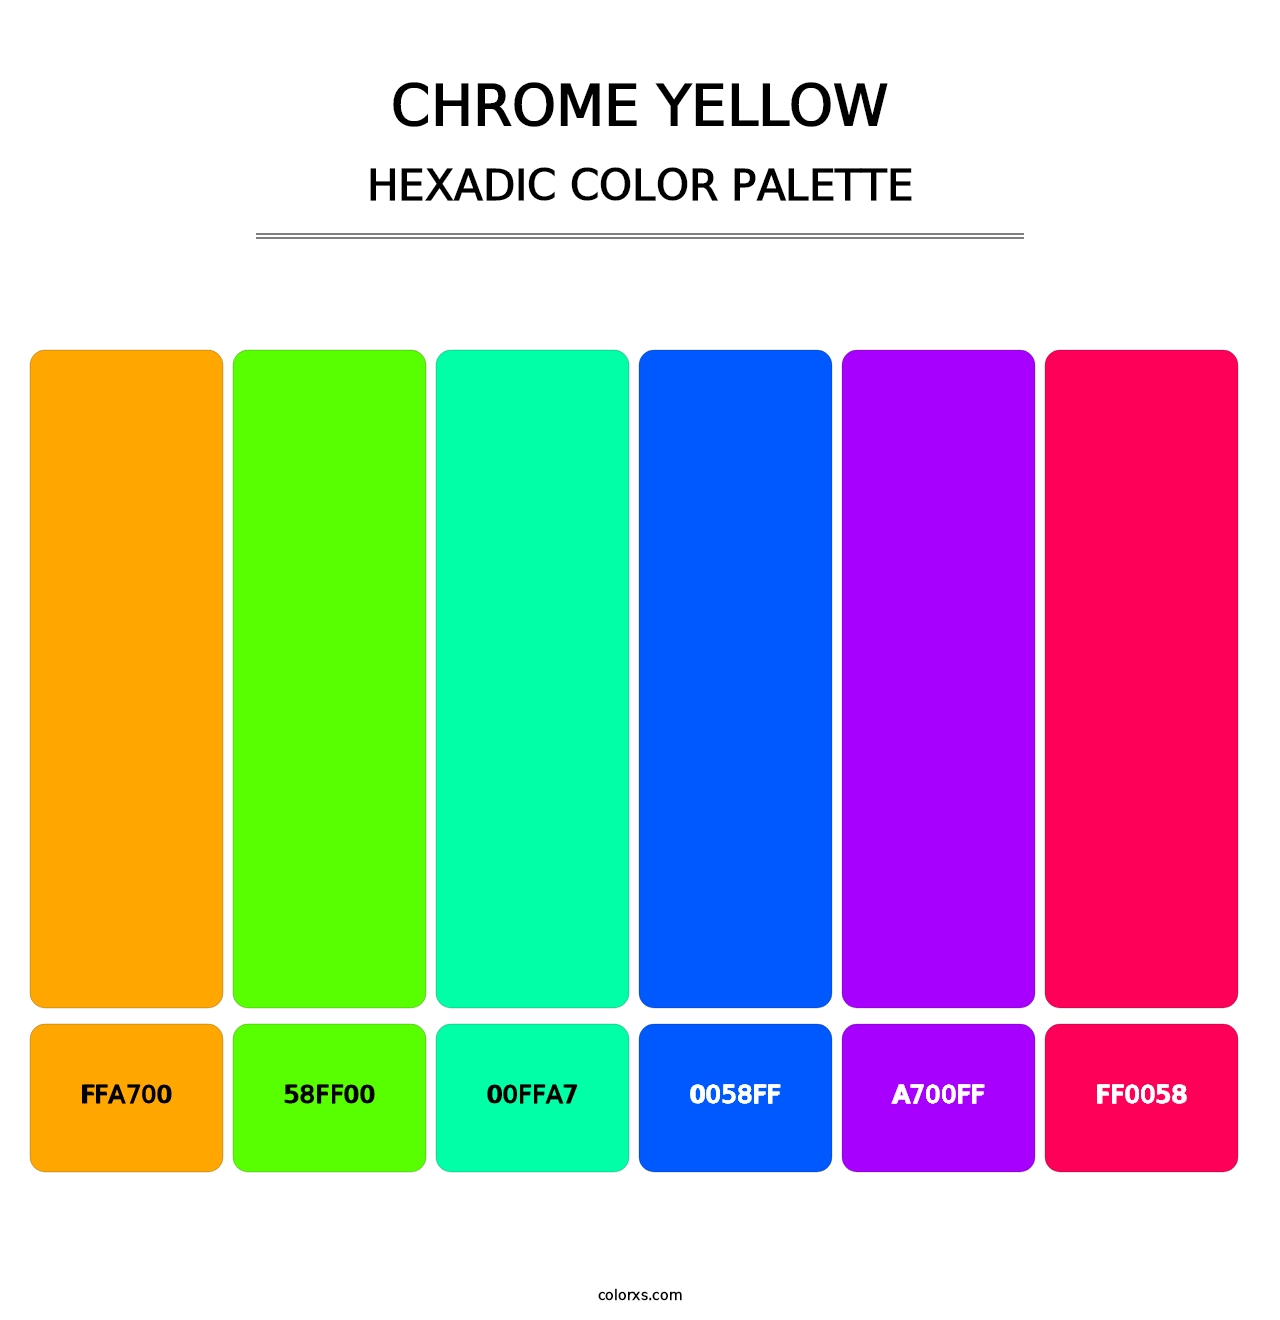 Chrome Yellow - Hexadic Color Palette